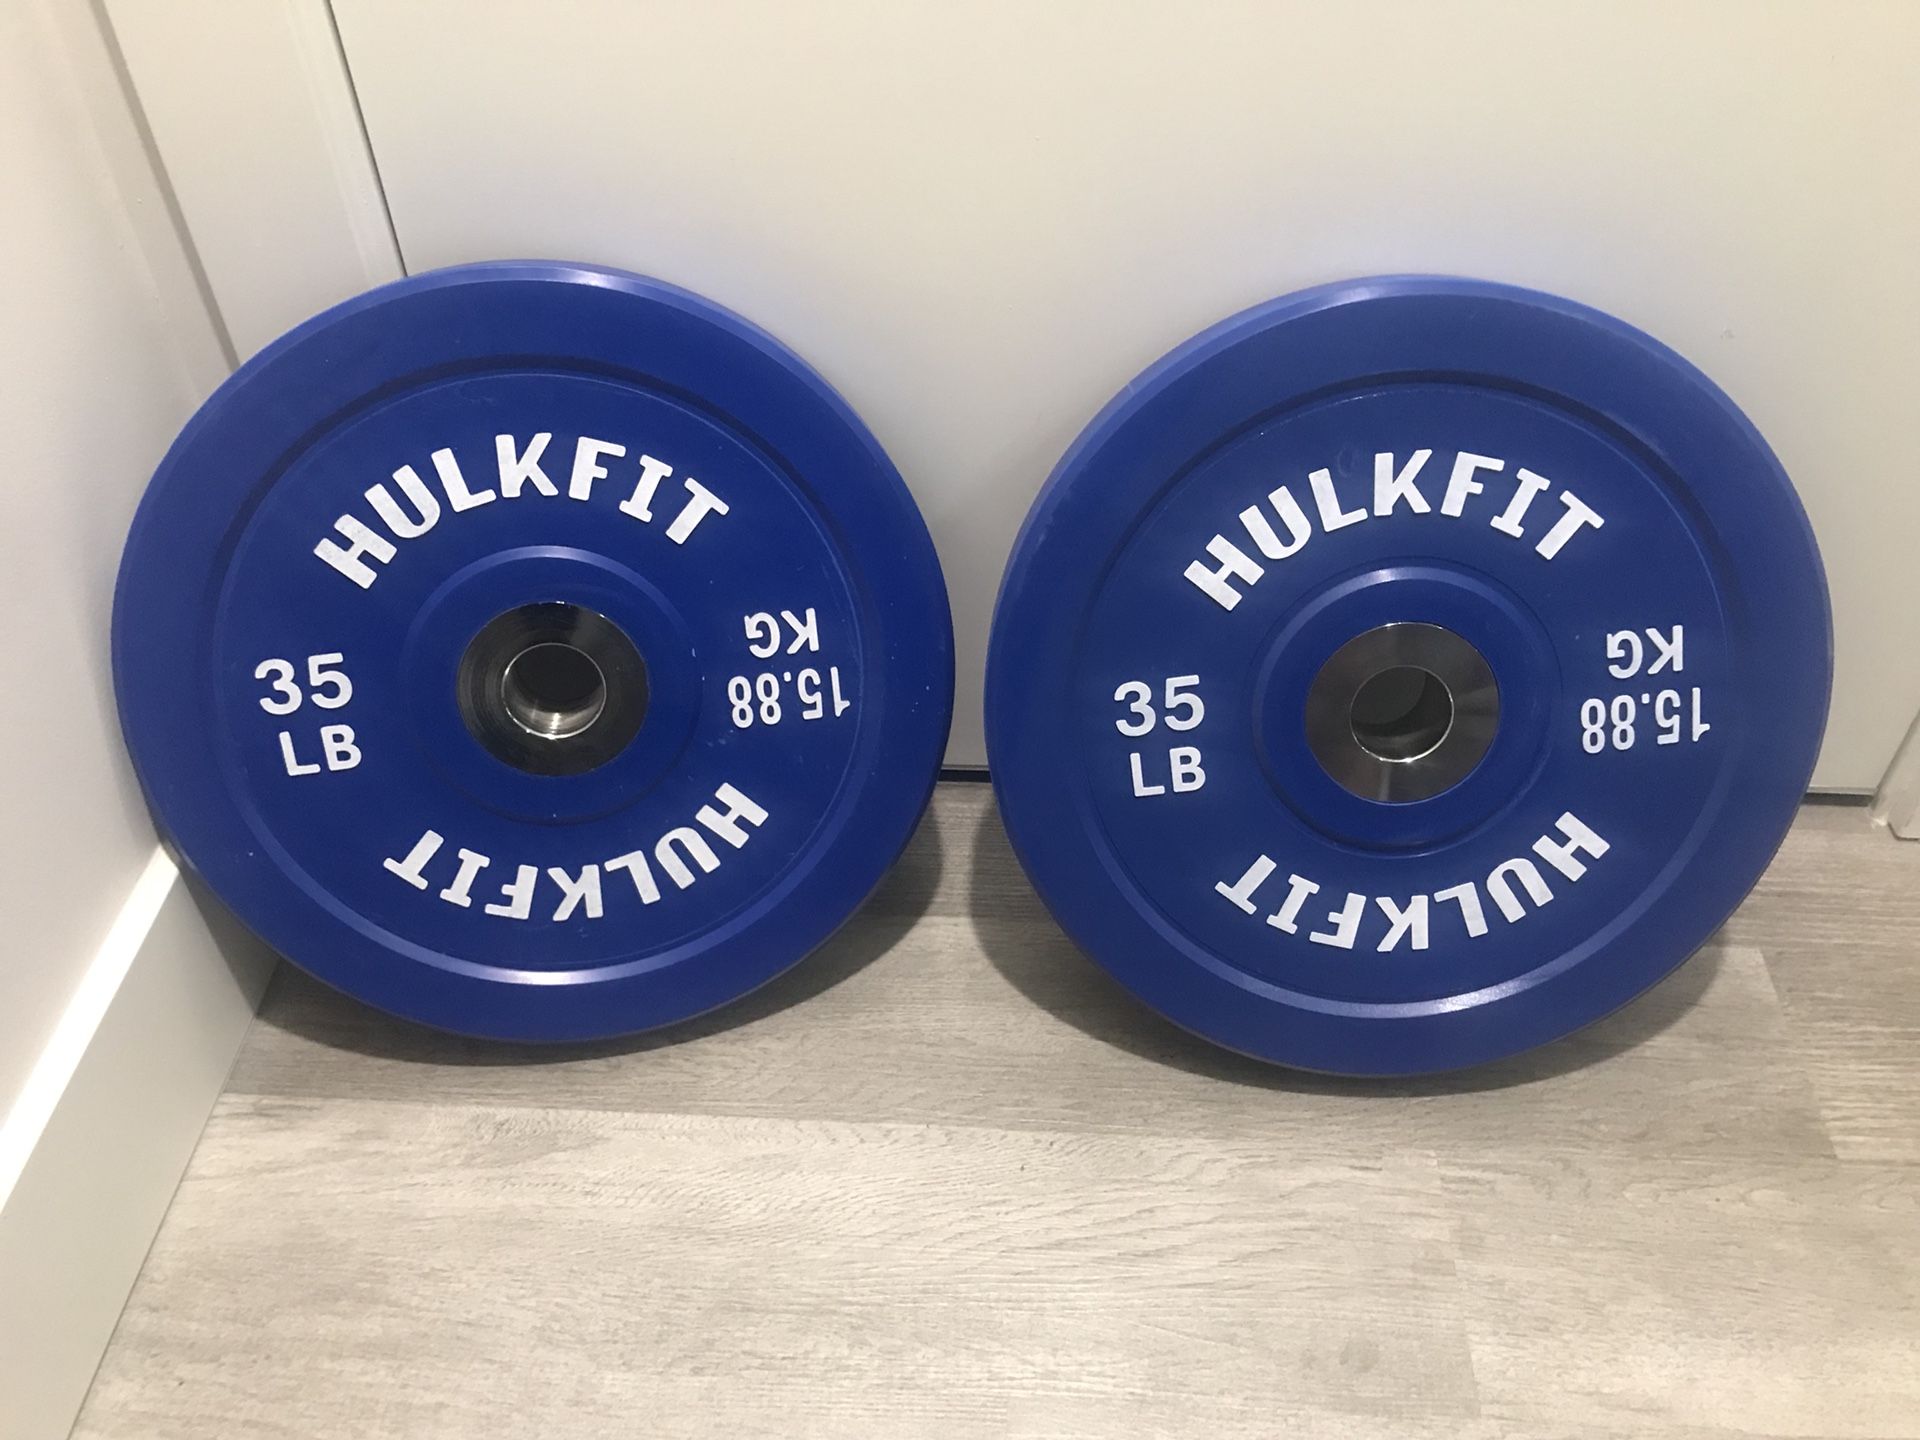 35 lb bumper plates barbell weights